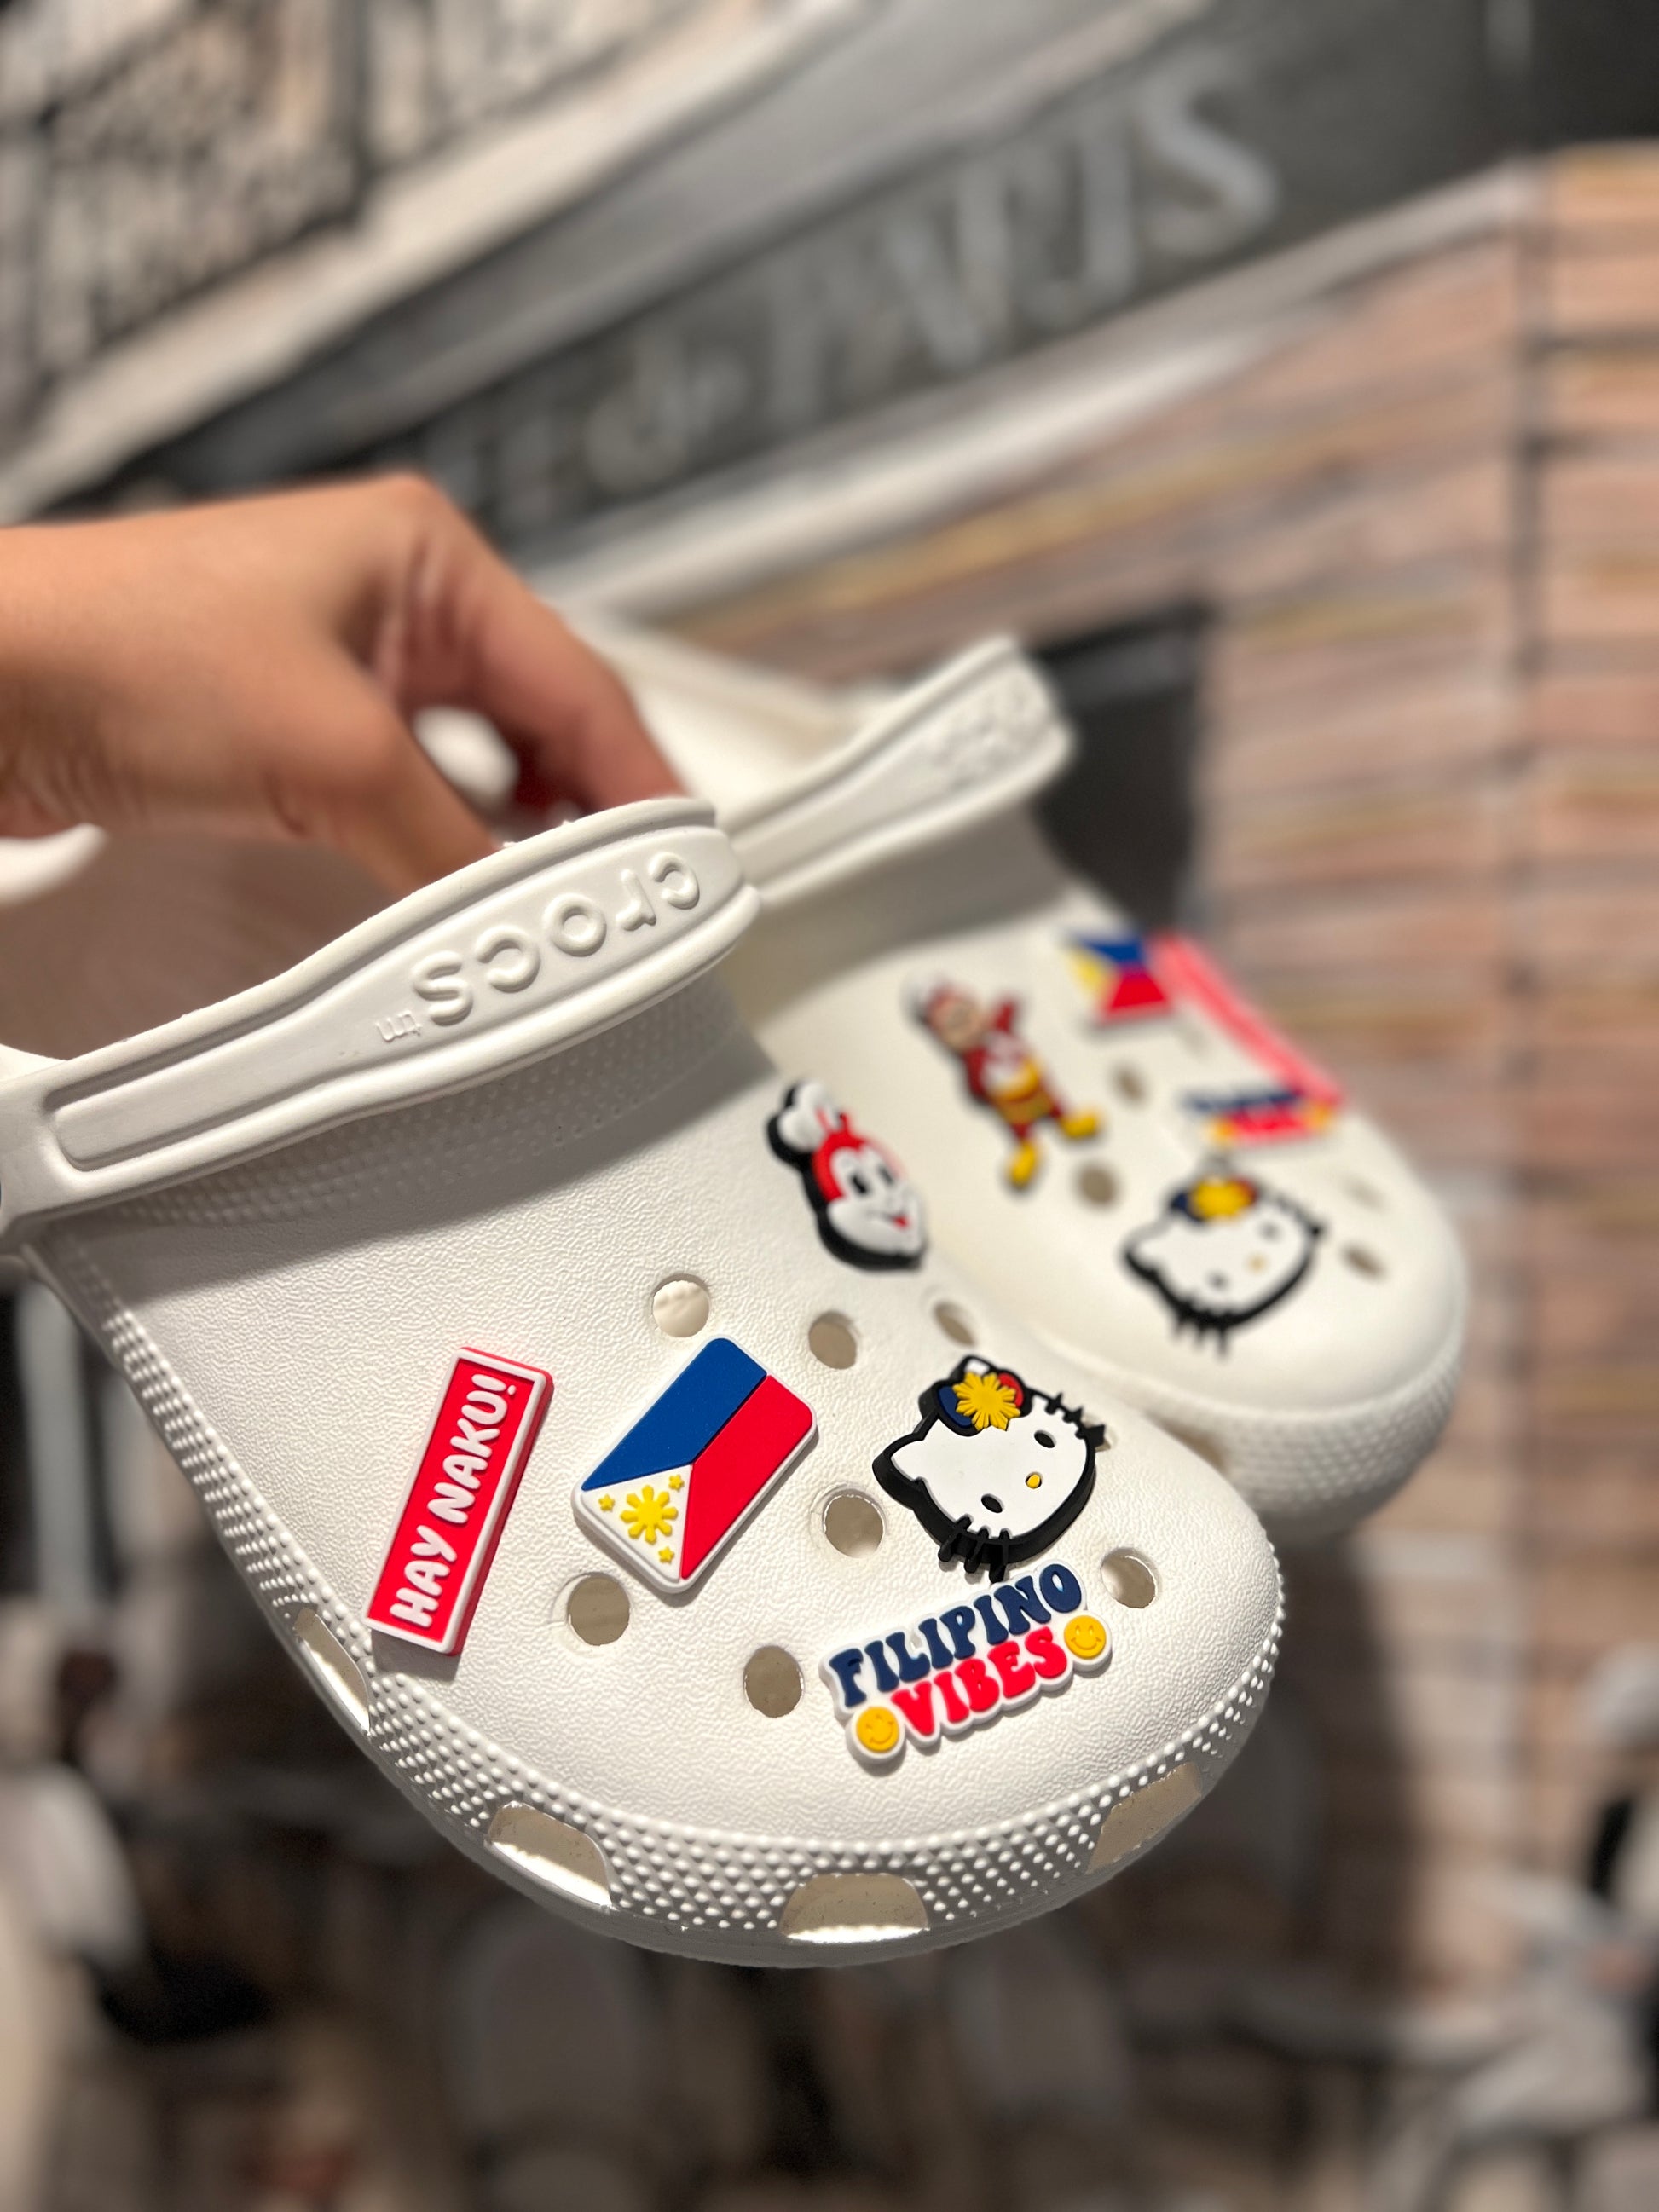 Crocs Filipino Shoe Charms